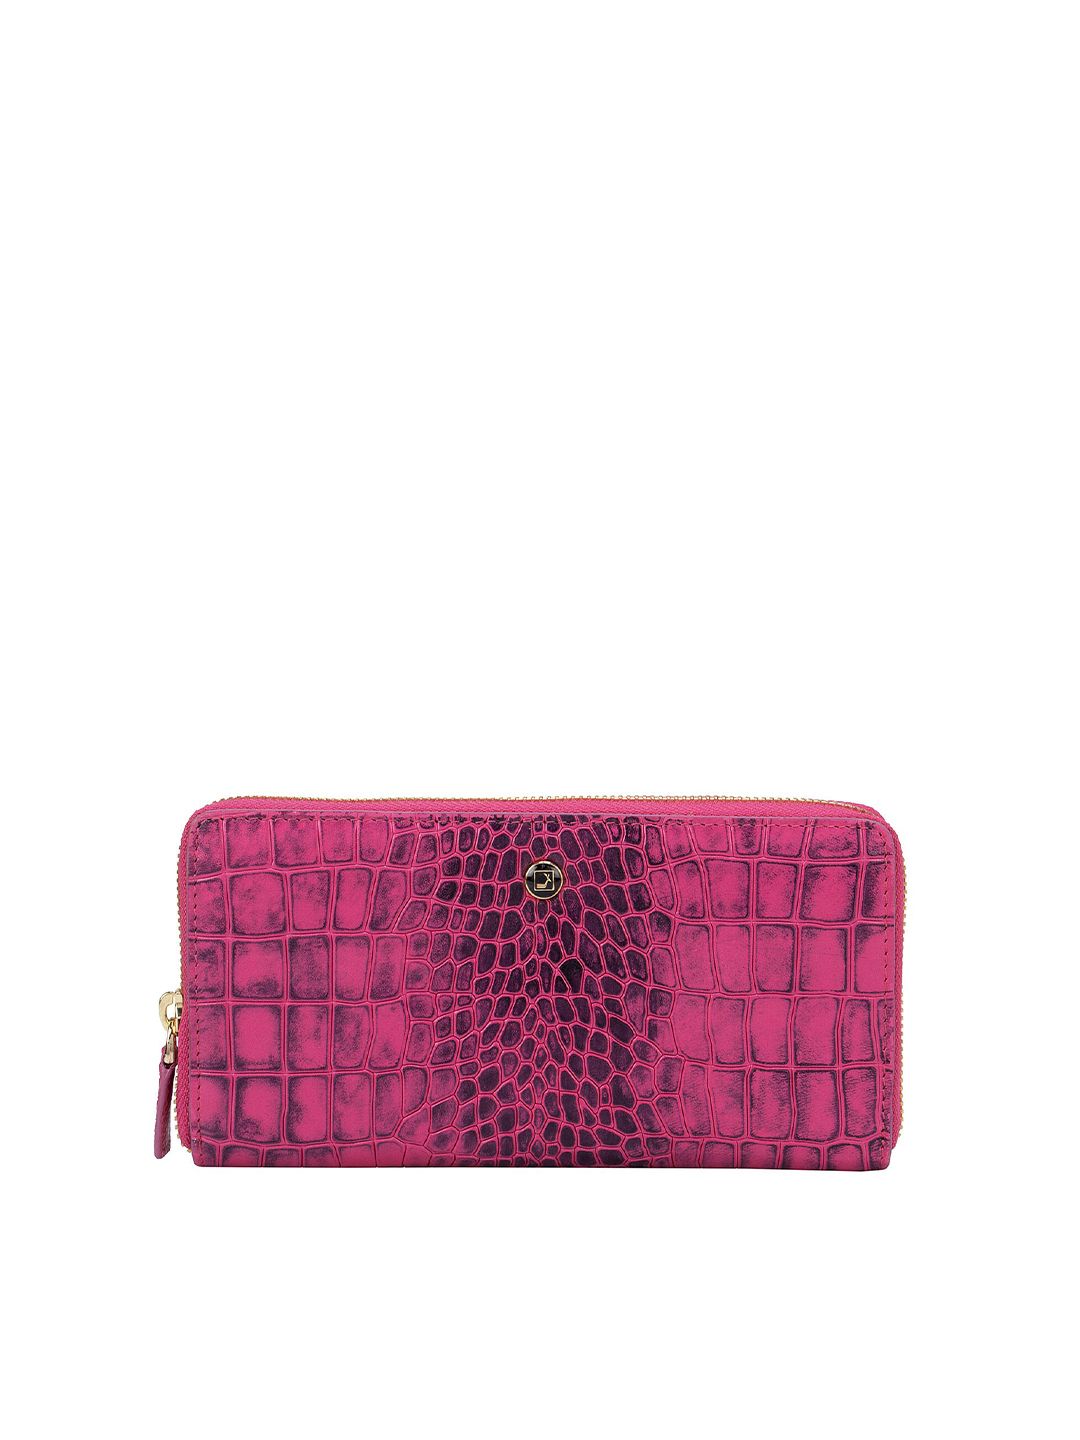 Da Milano Women Pink Animal Printed Textured Leather Zip Around Wallet Price in India